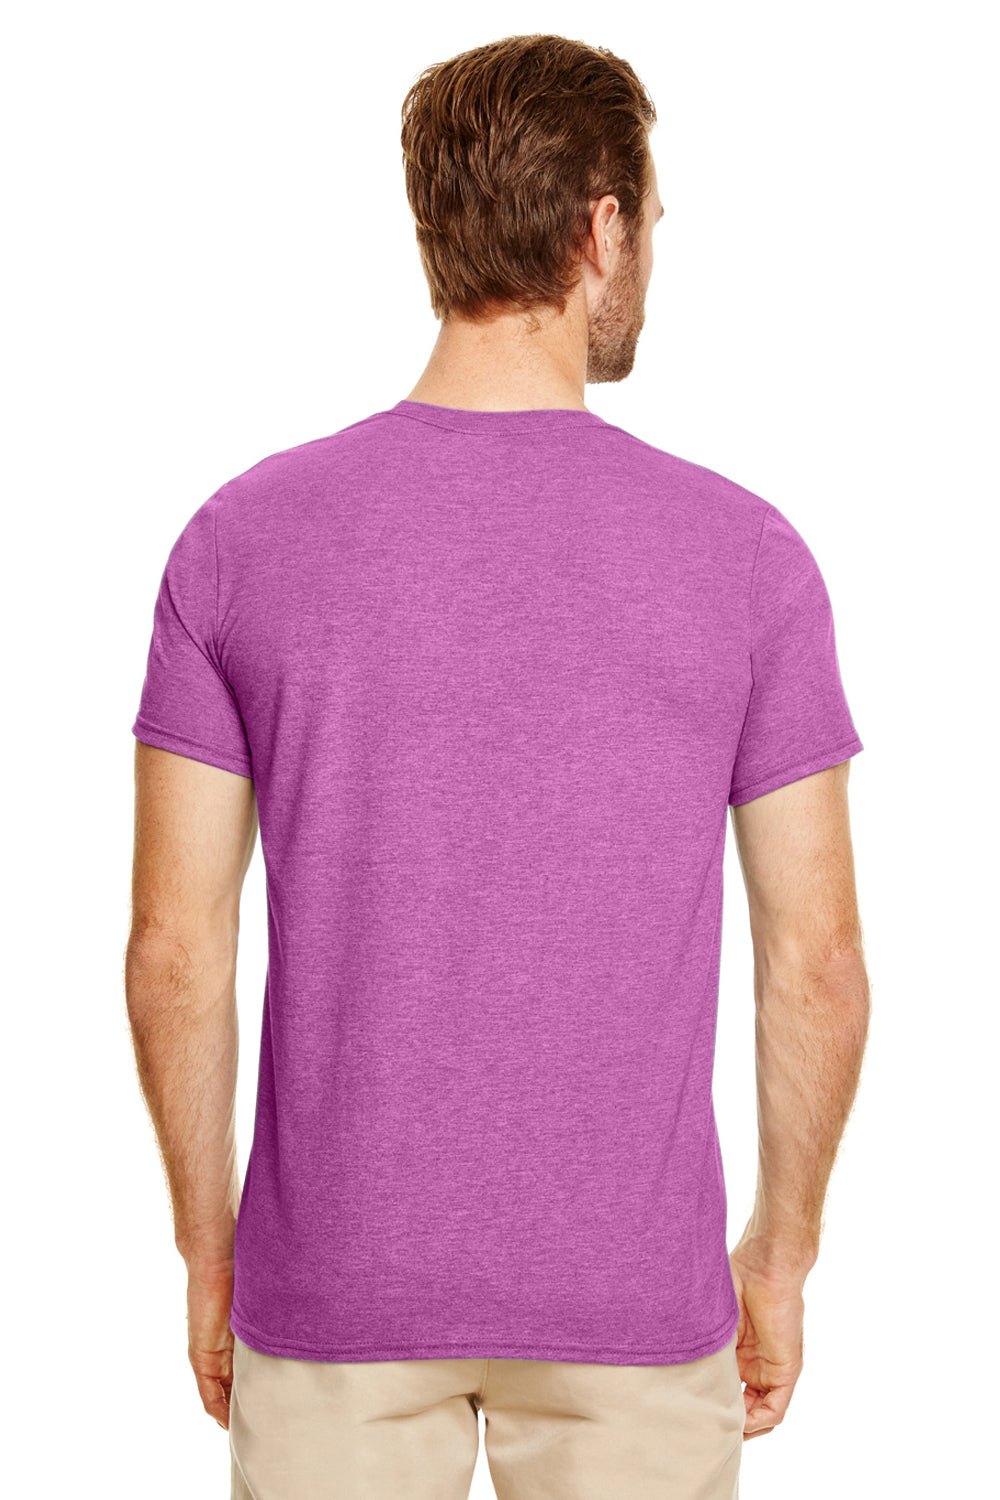 Gildan G640 Mens Softstyle Short Sleeve Crewneck T-Shirt Heather Orchid Purple Back